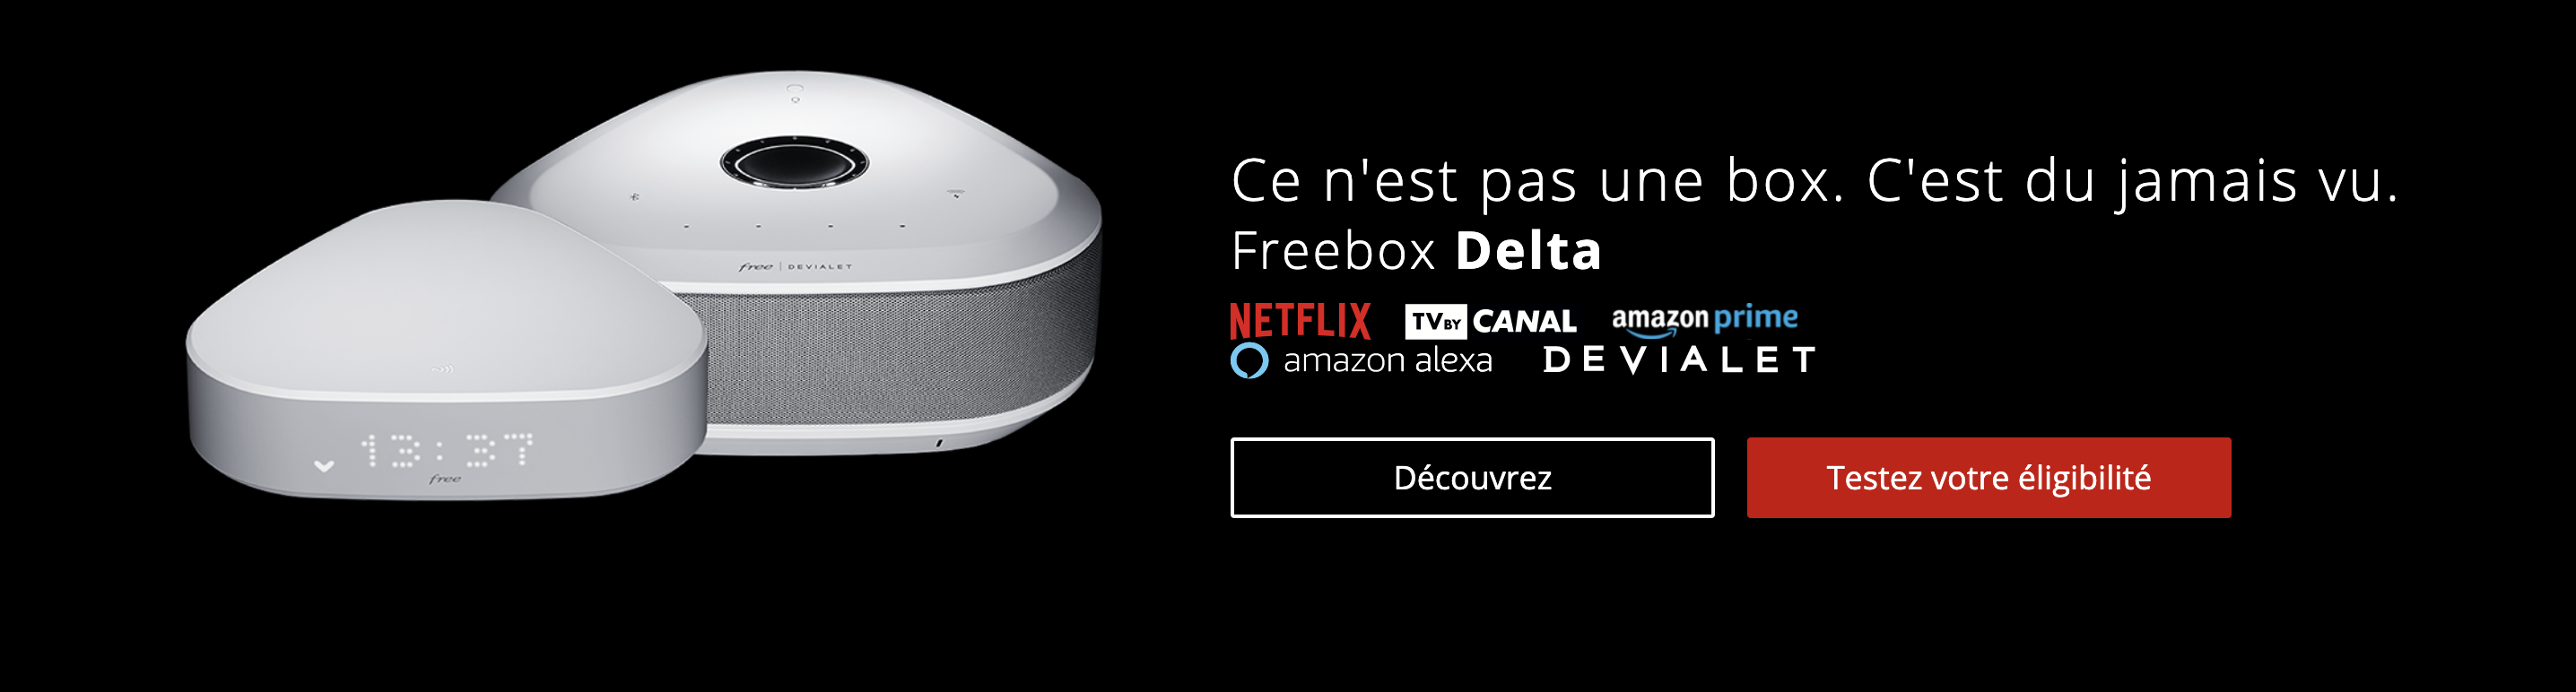 Accueil freebox delta